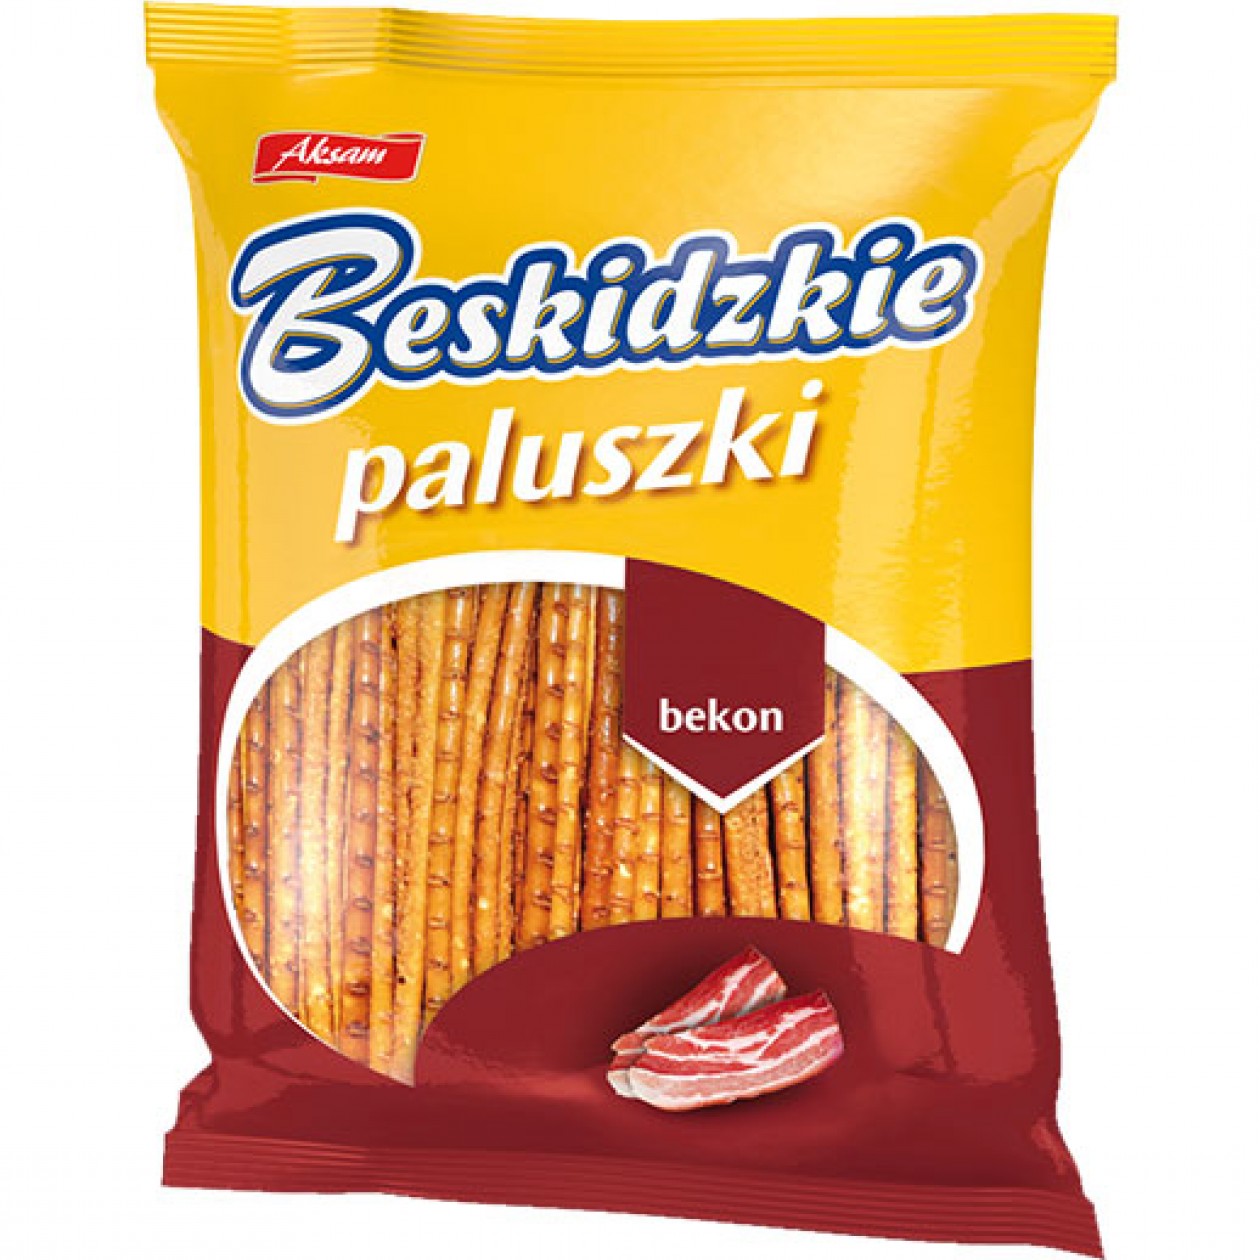 Aksam Beskidzkie Paluszki Bacon sticks 9x220g